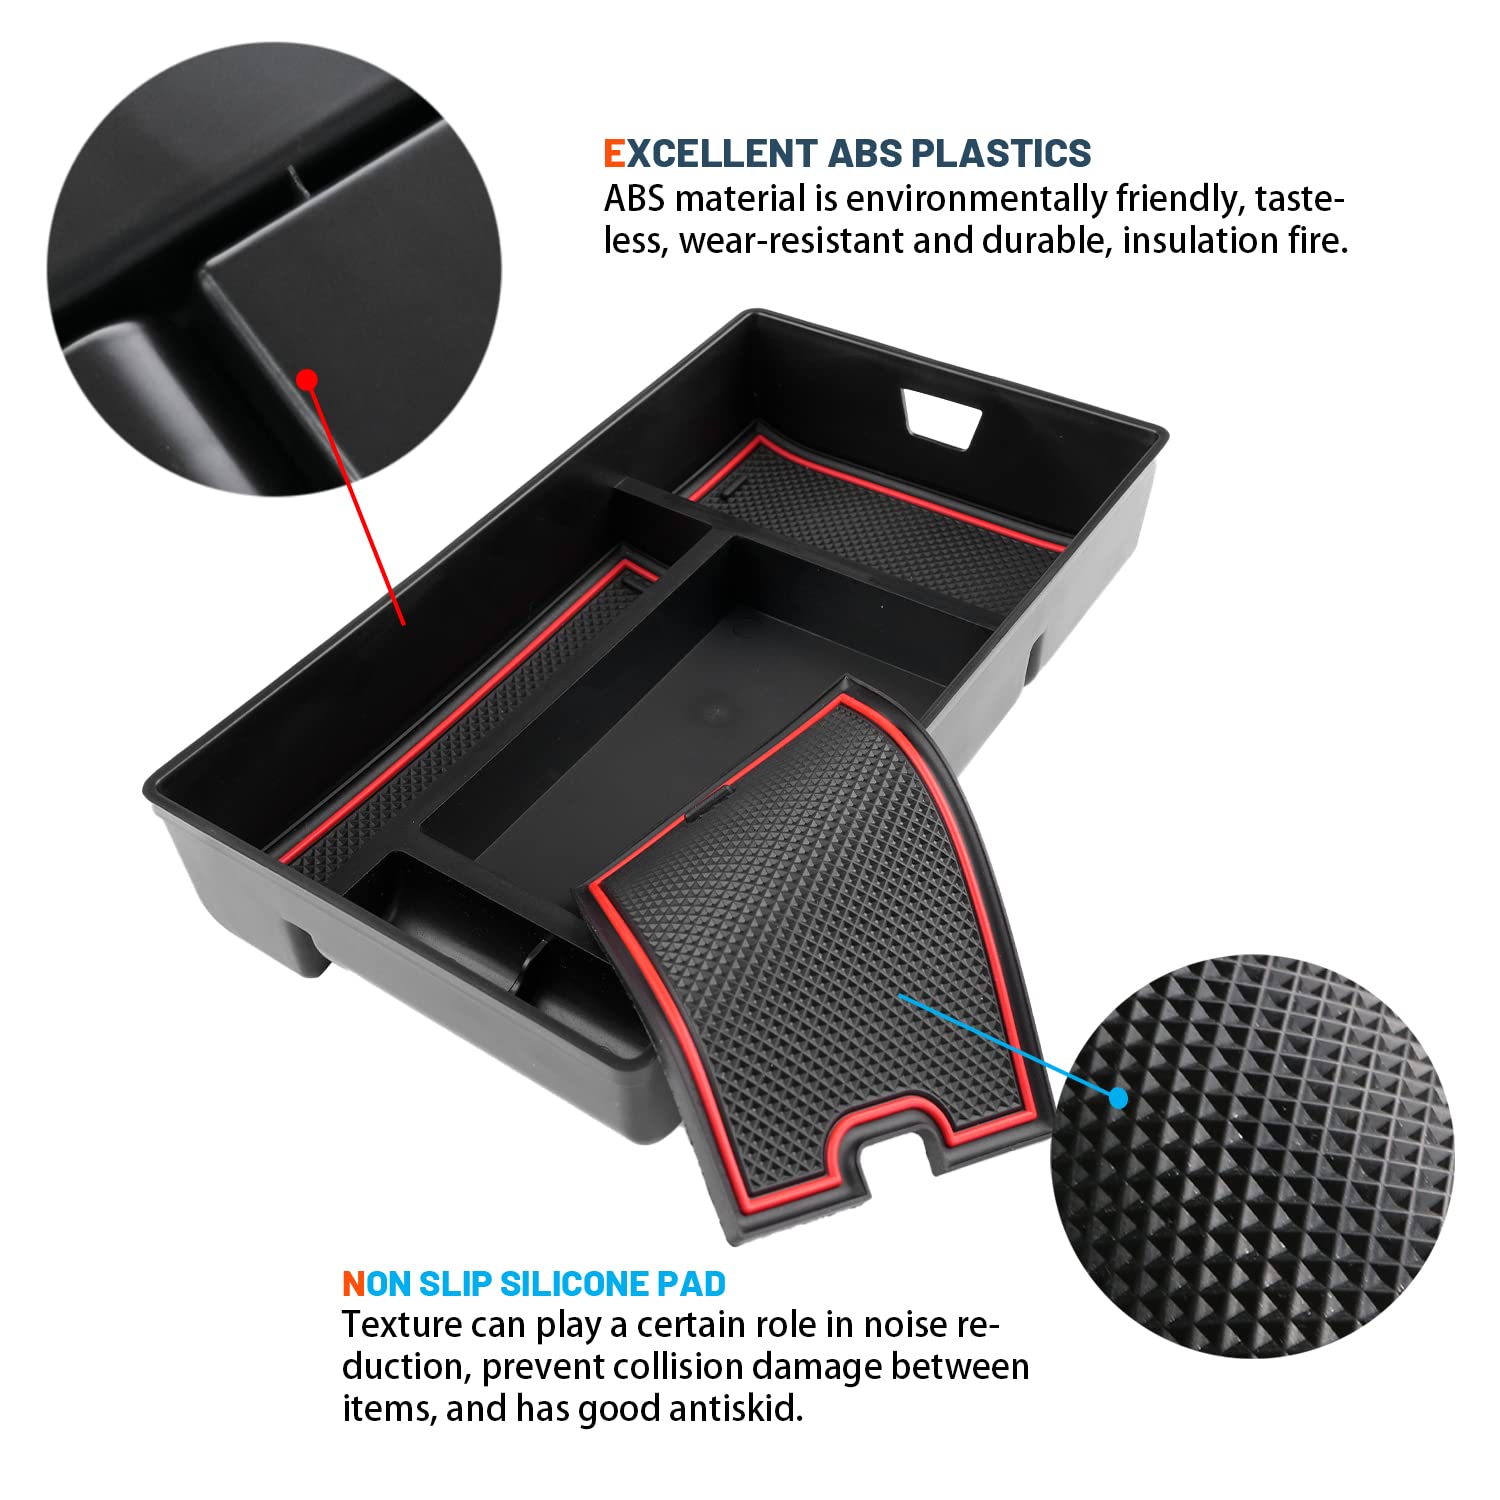 Lexus NX Console Organizer Tray 2022+ - LFOTPP Car Accessories